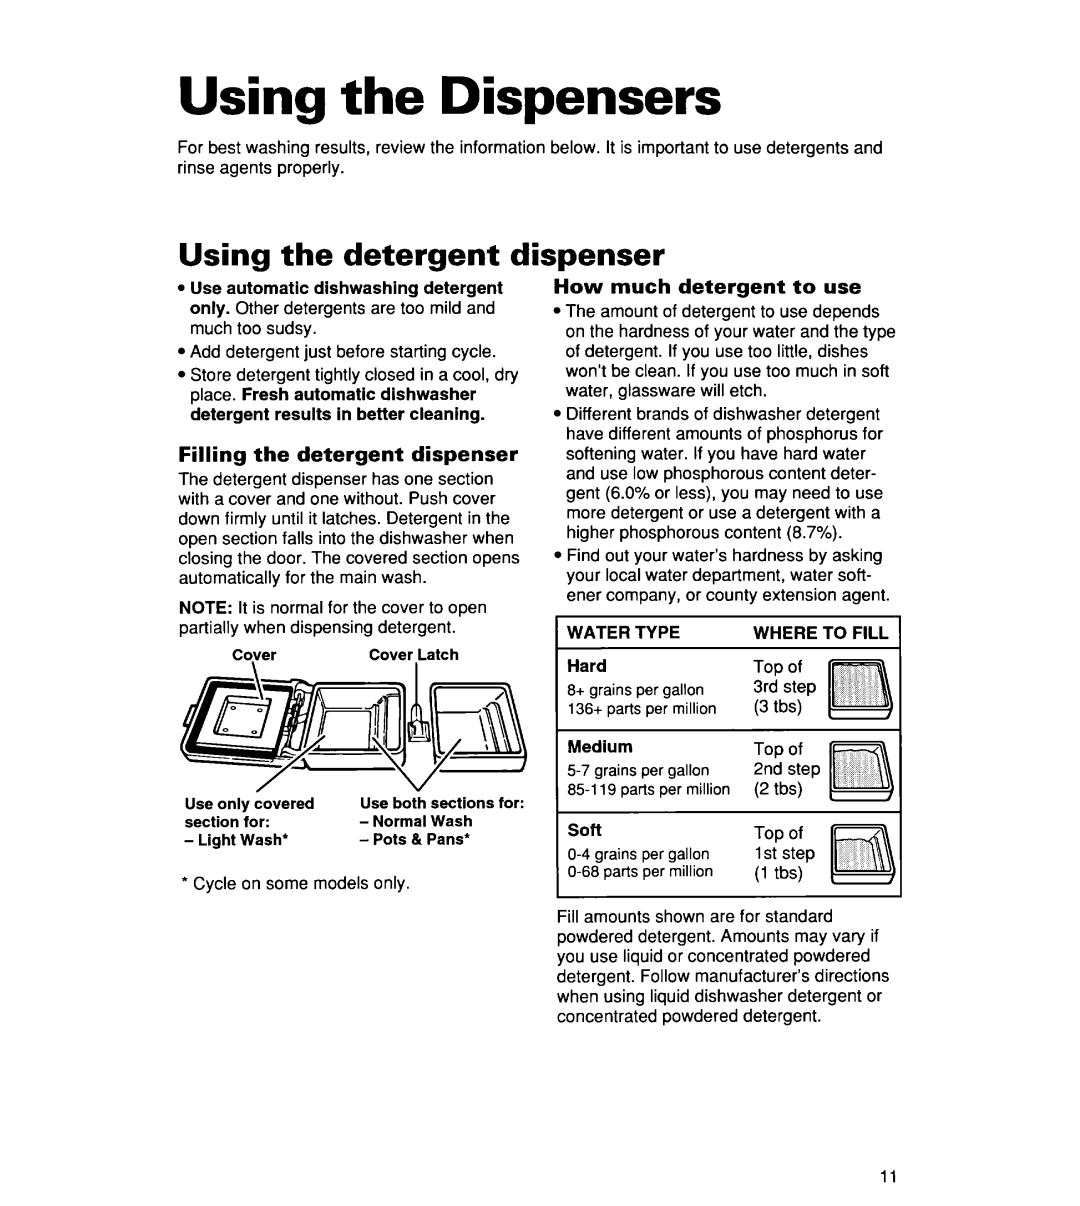 Whirlpool 830, Series 400, 806 Using the Dispensers, Using the detergent dispenser, soft, Filling the detergent dispenser 